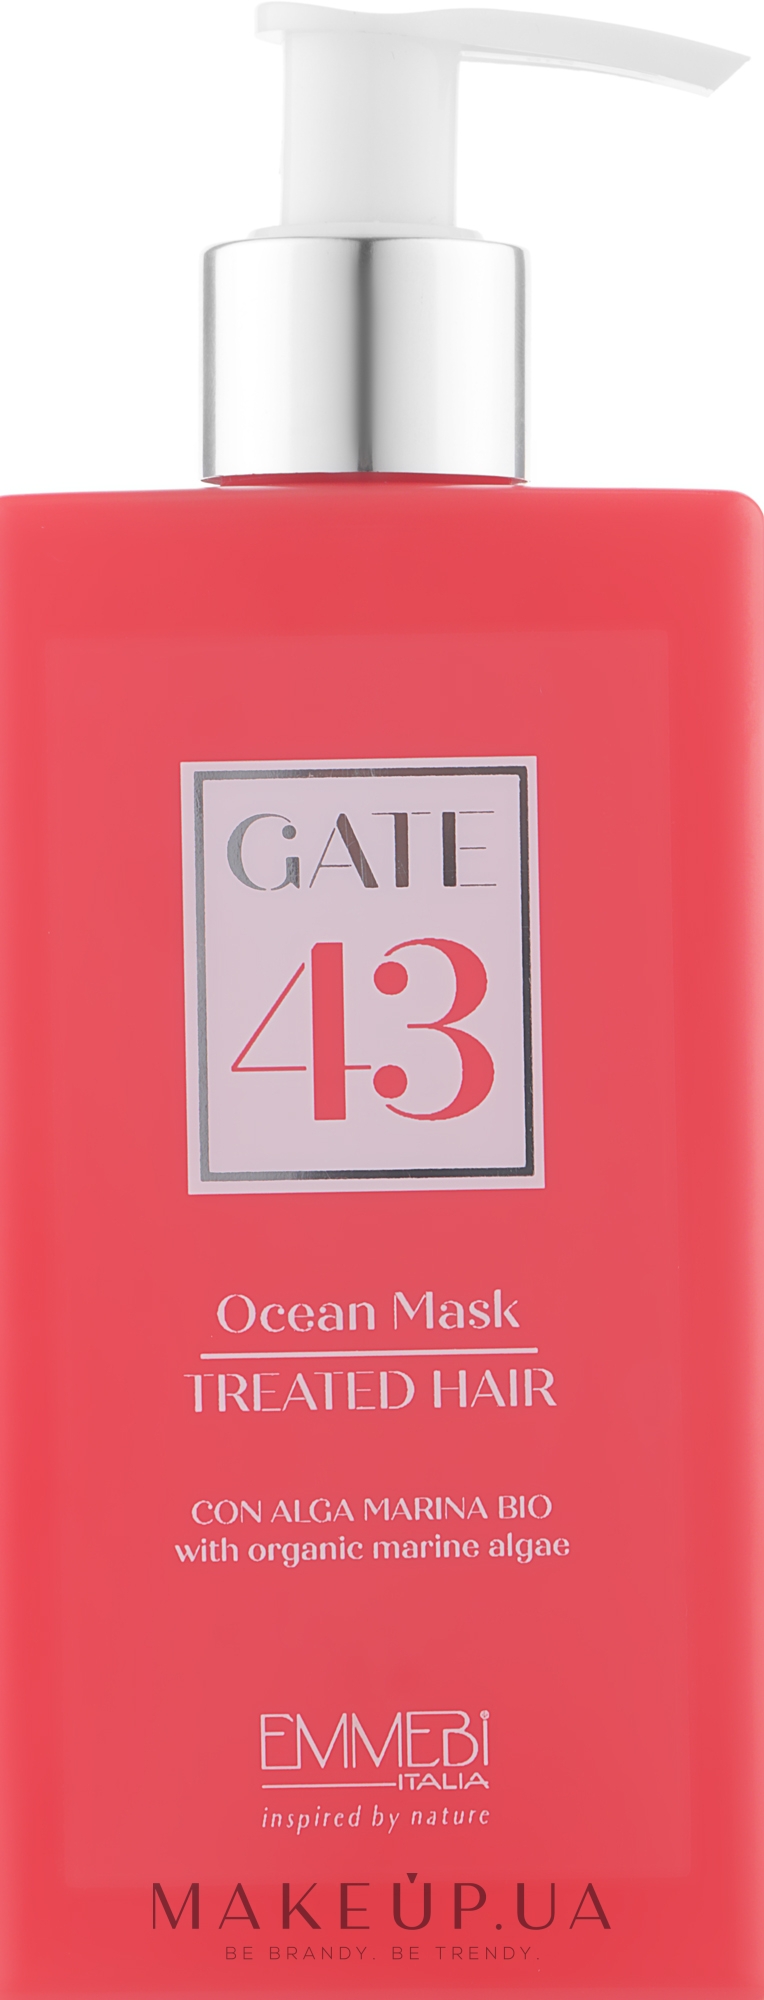 Маска для фарбованого й пошкодженого волосся - Emmebi Italia Gate 43 Wash Ocean Mask Treated Hair — фото 200ml